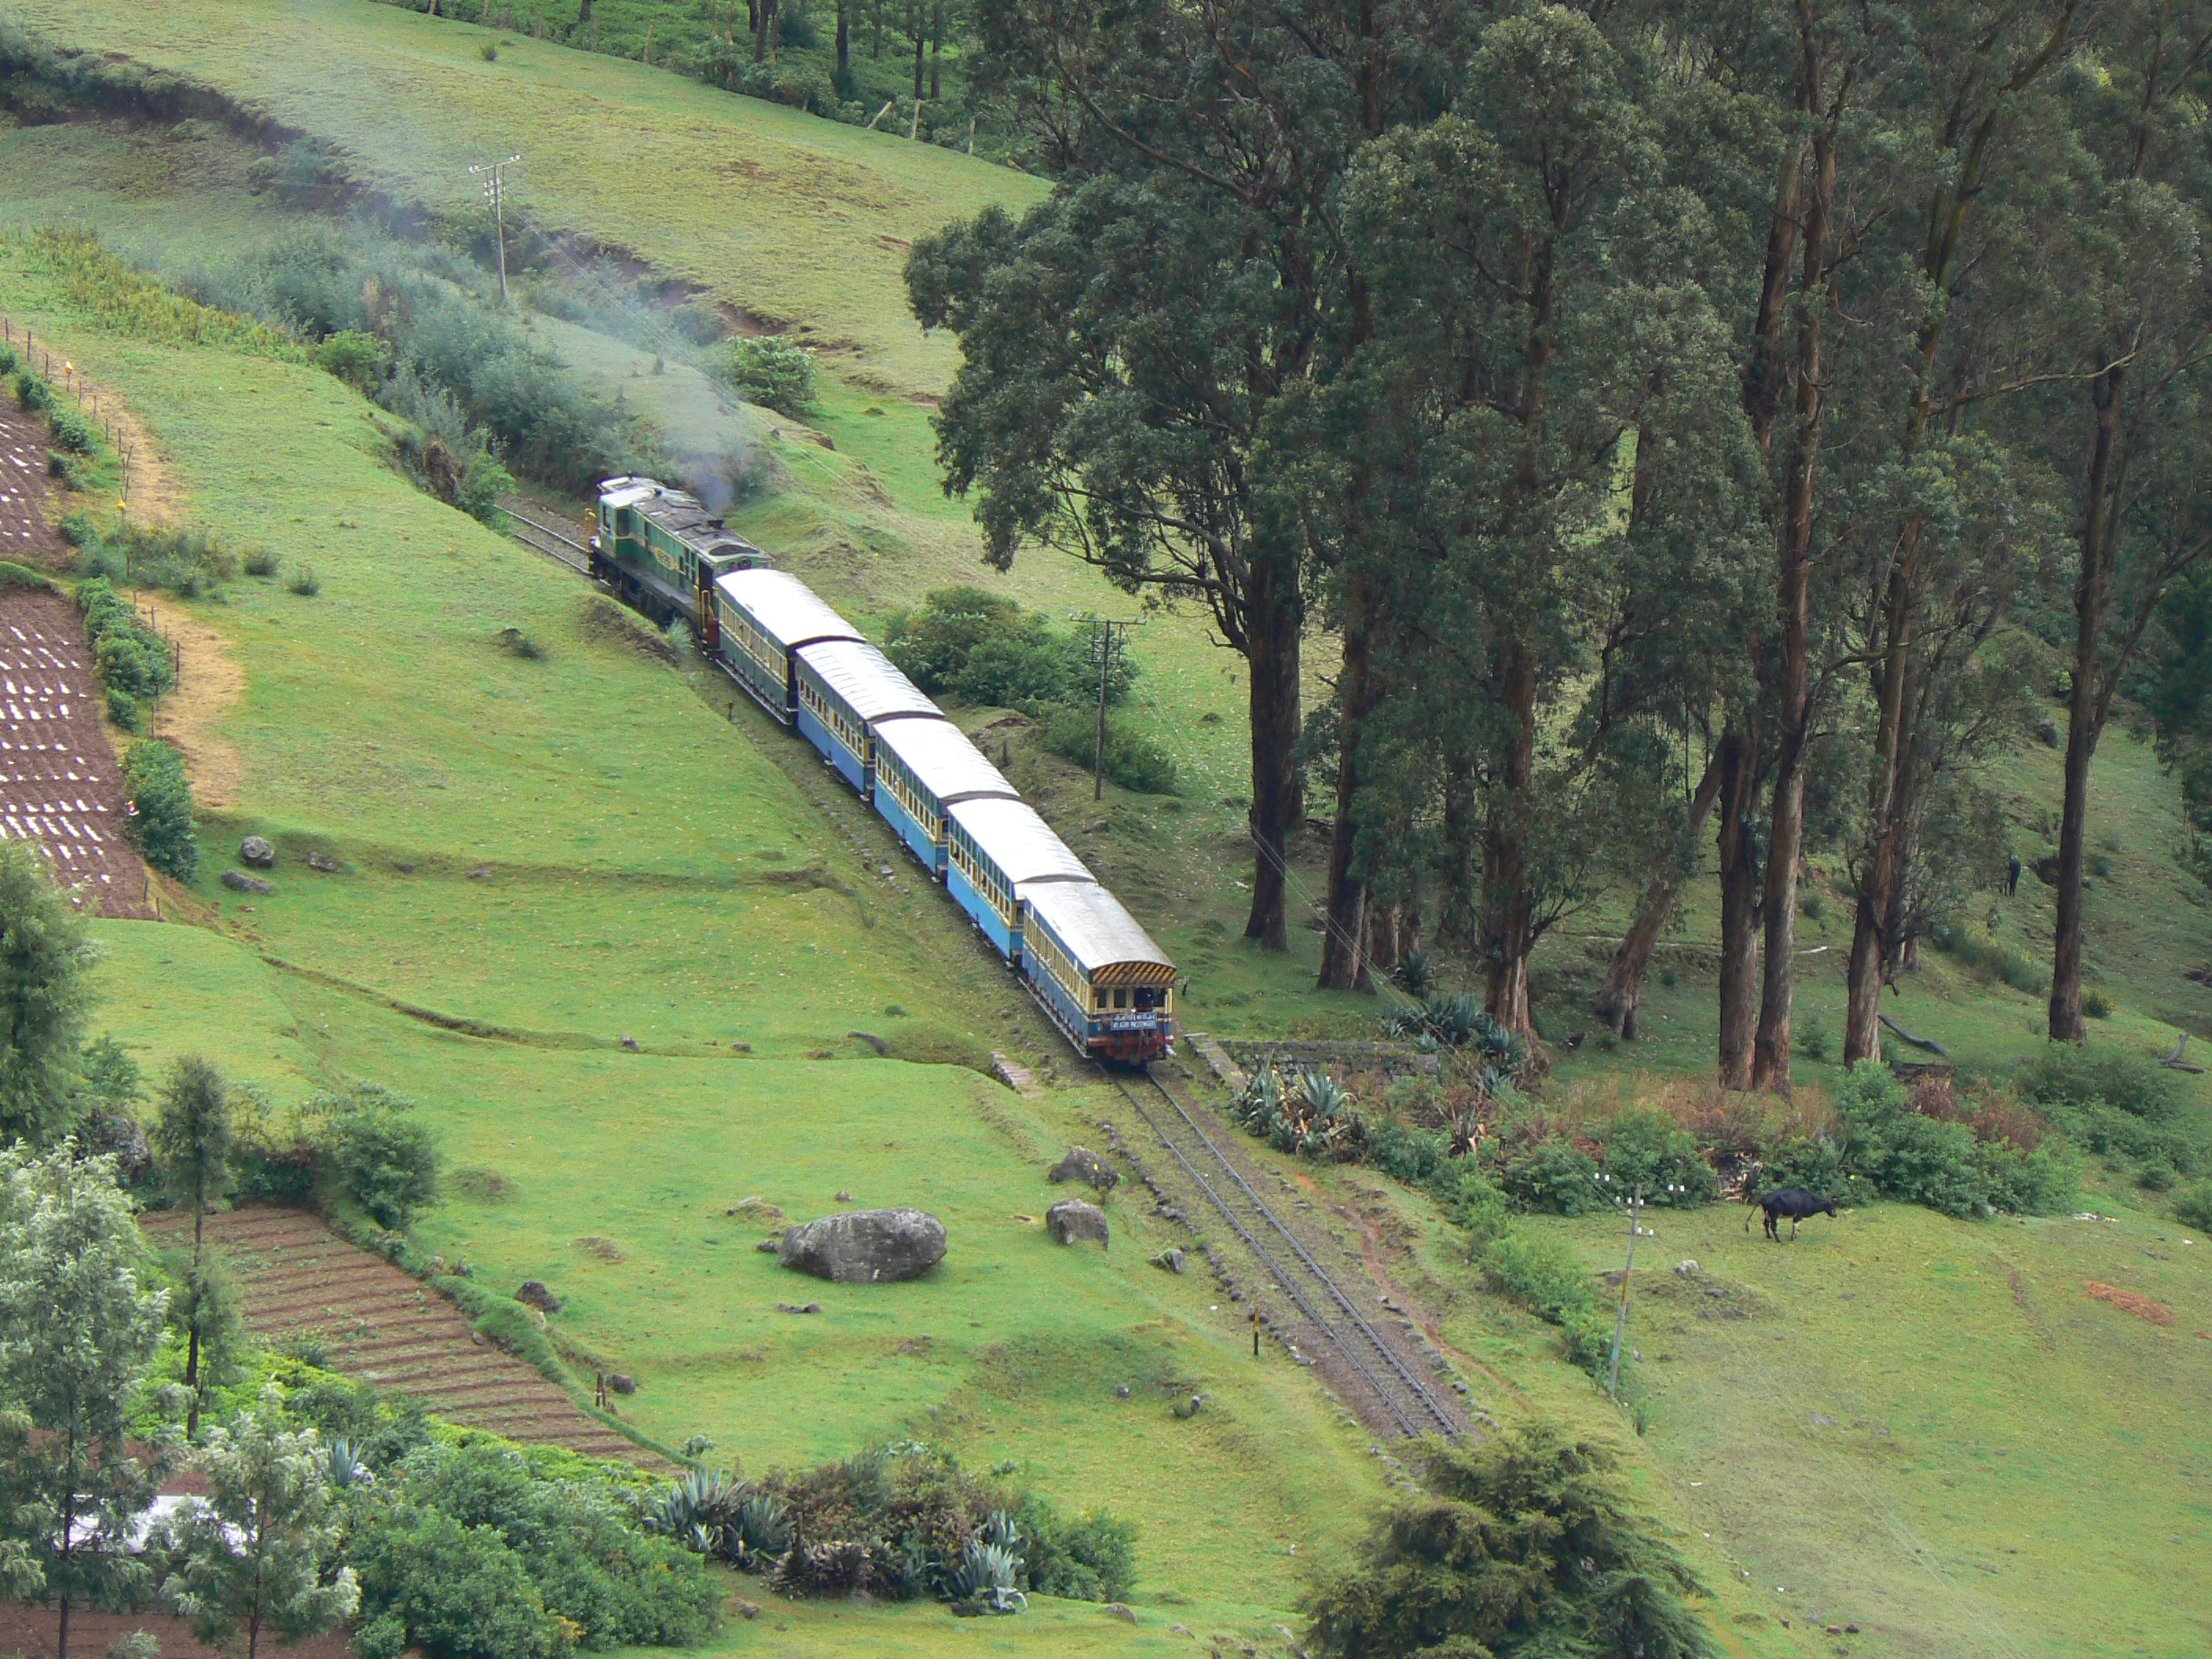 Train to Ooty: The Heritage Nilgiri Mountain Railway